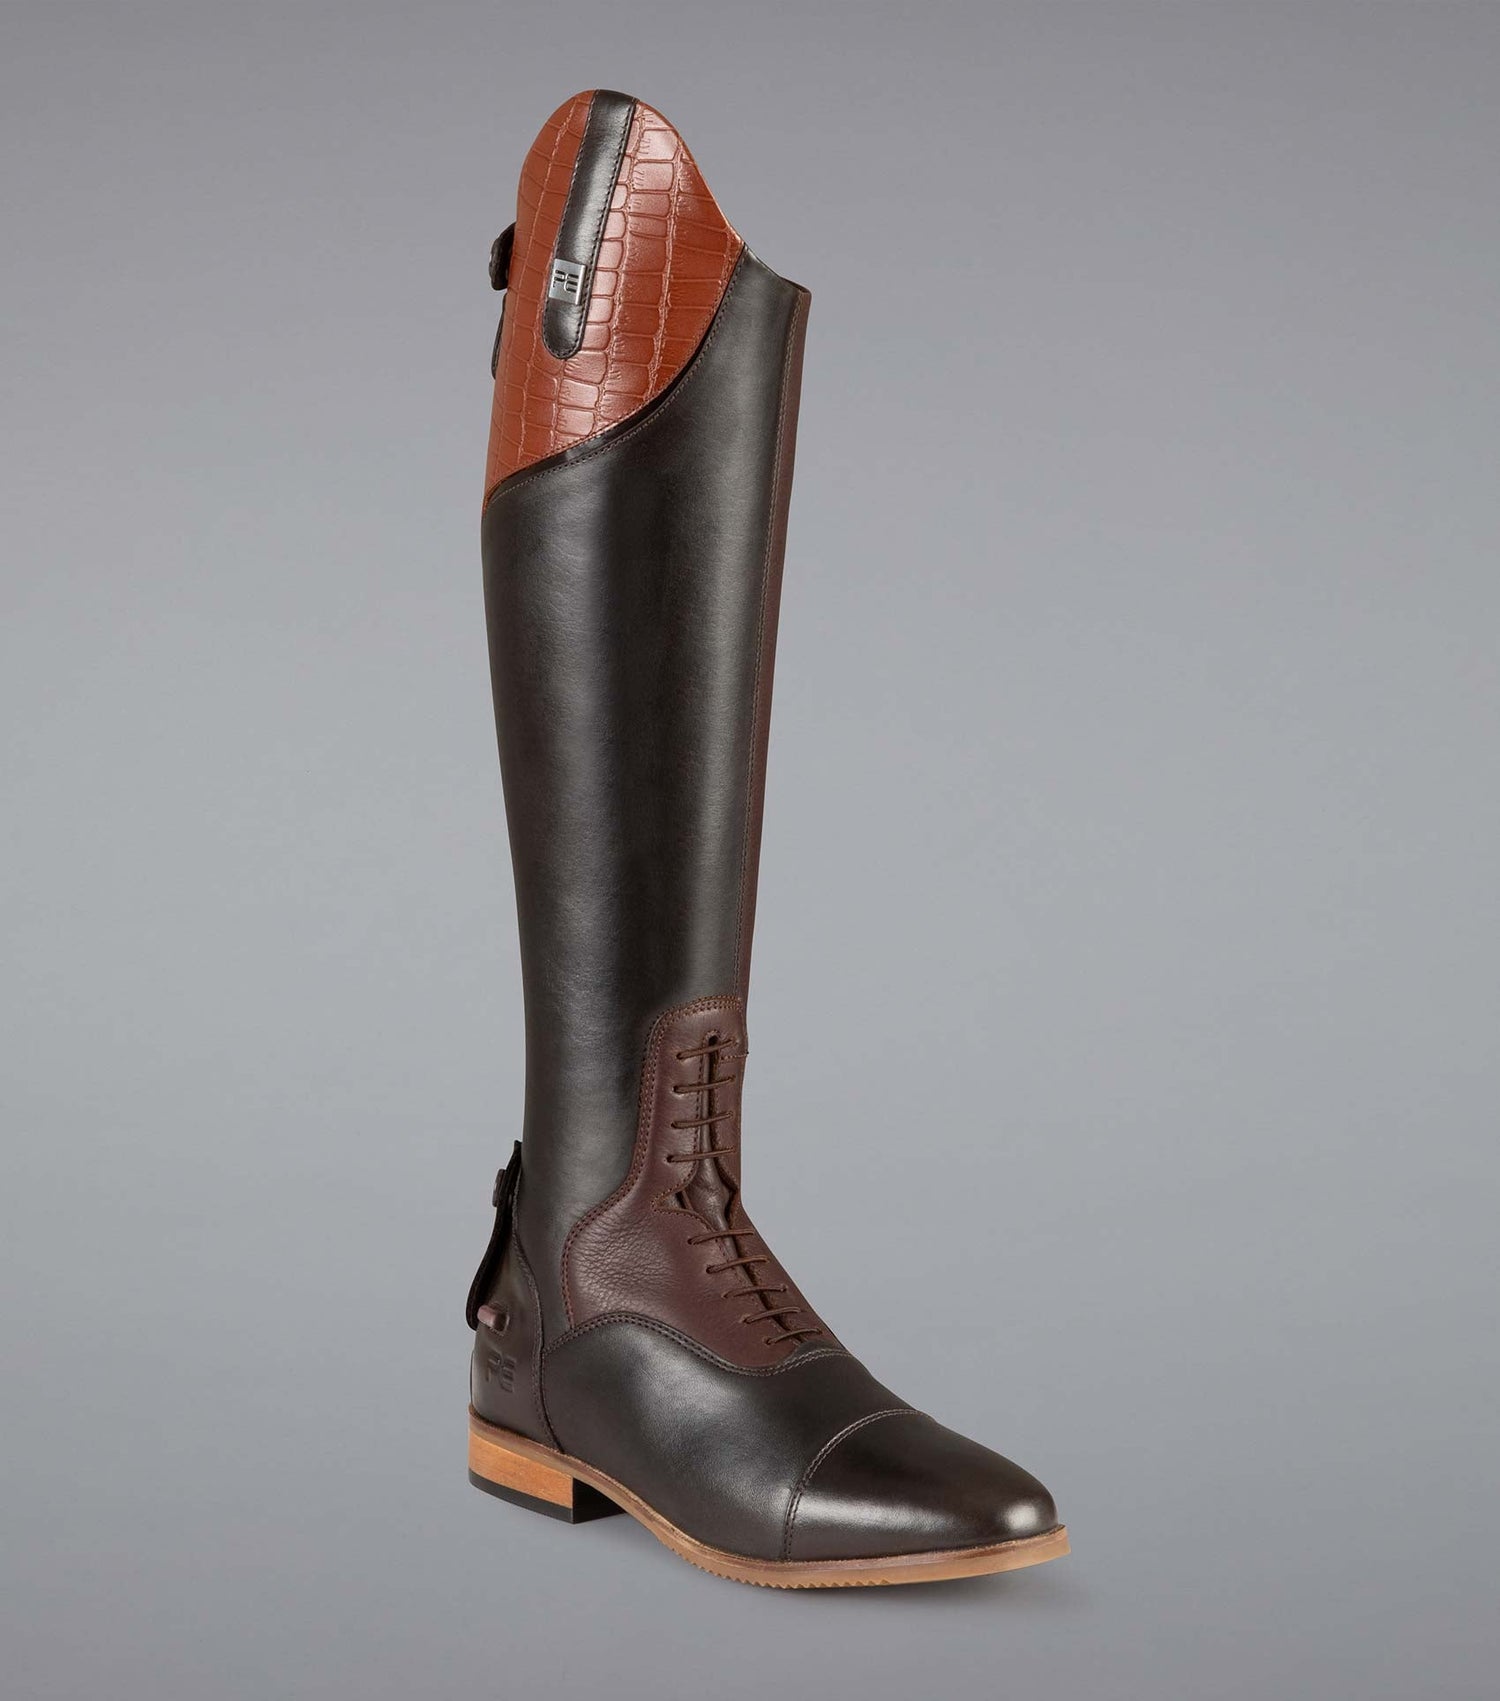 Description:Passaggio Ladies Leather Field Tall Riding Boot_Colour:Brown_Position:1